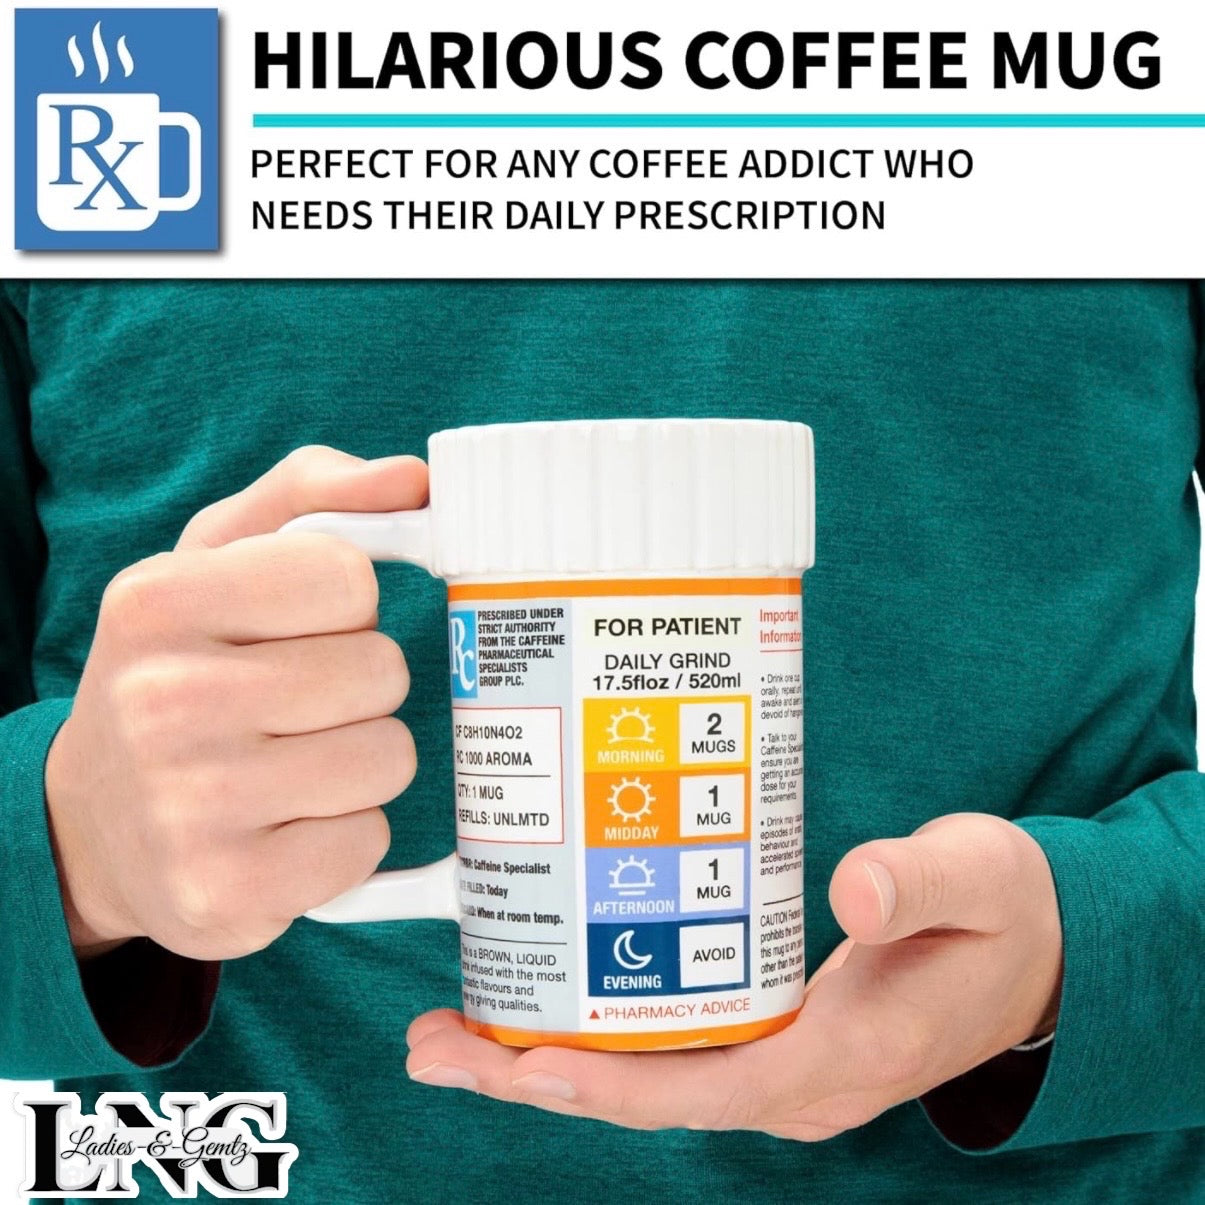 Funny Prescription Bottle Coffee Mug | Ceramic | 17.5 oz XL | Gift for Her, Him, Wife, Coworker